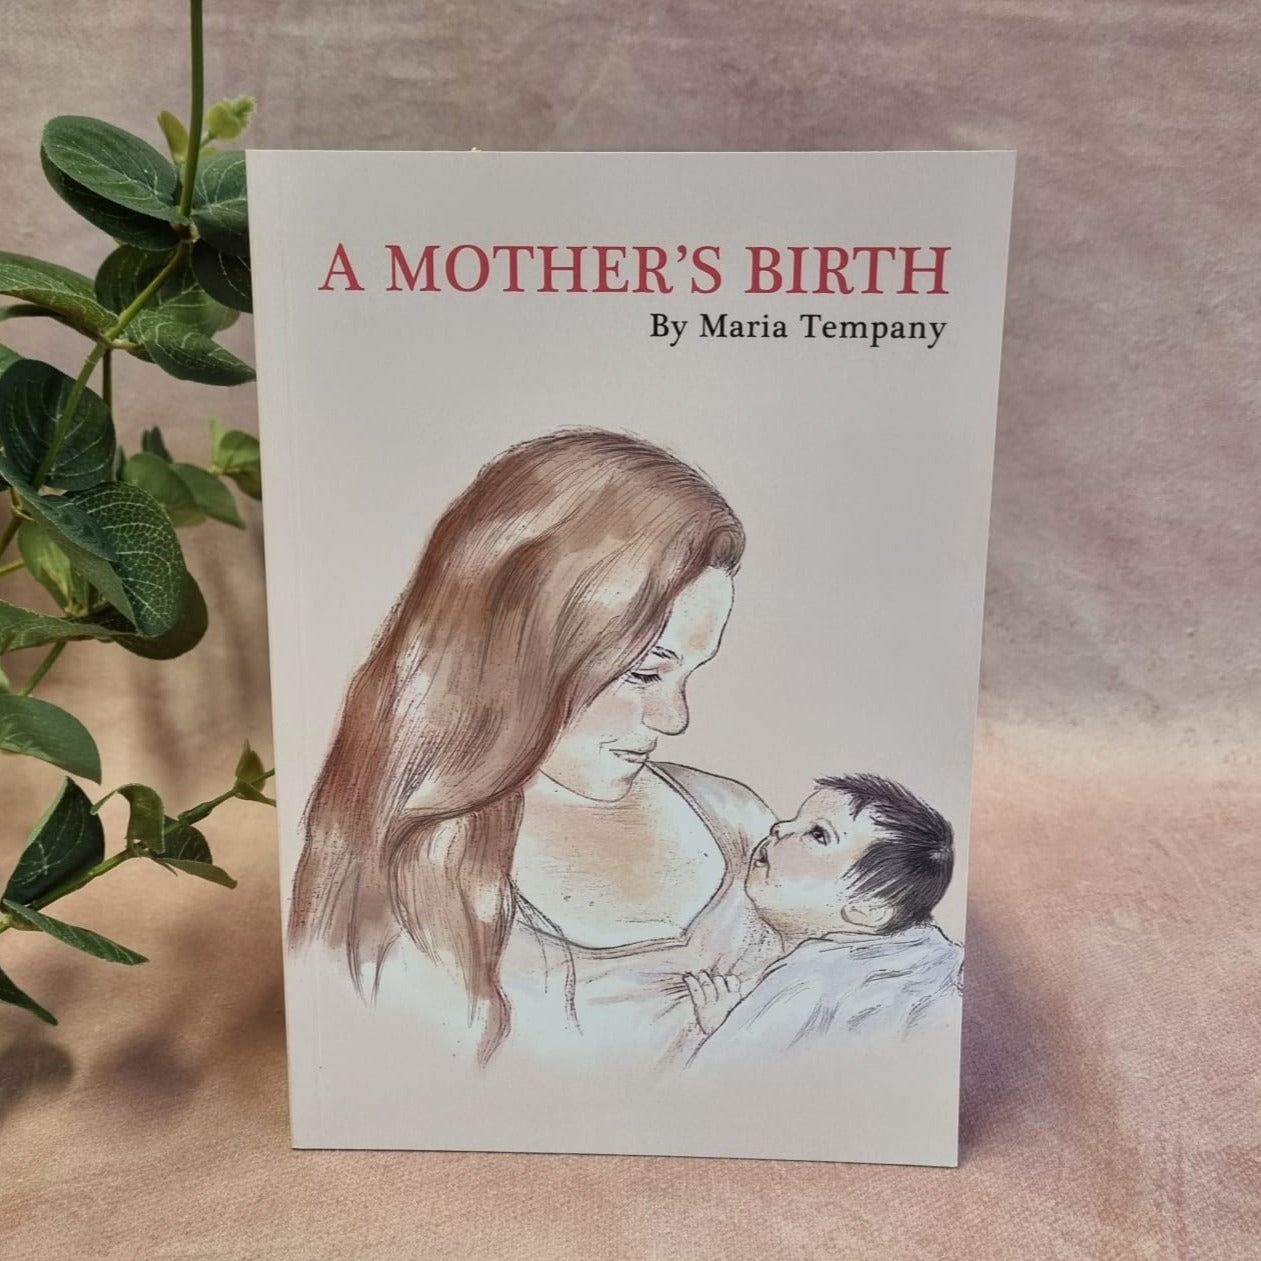 A Mother's Birth by Maria Tempany